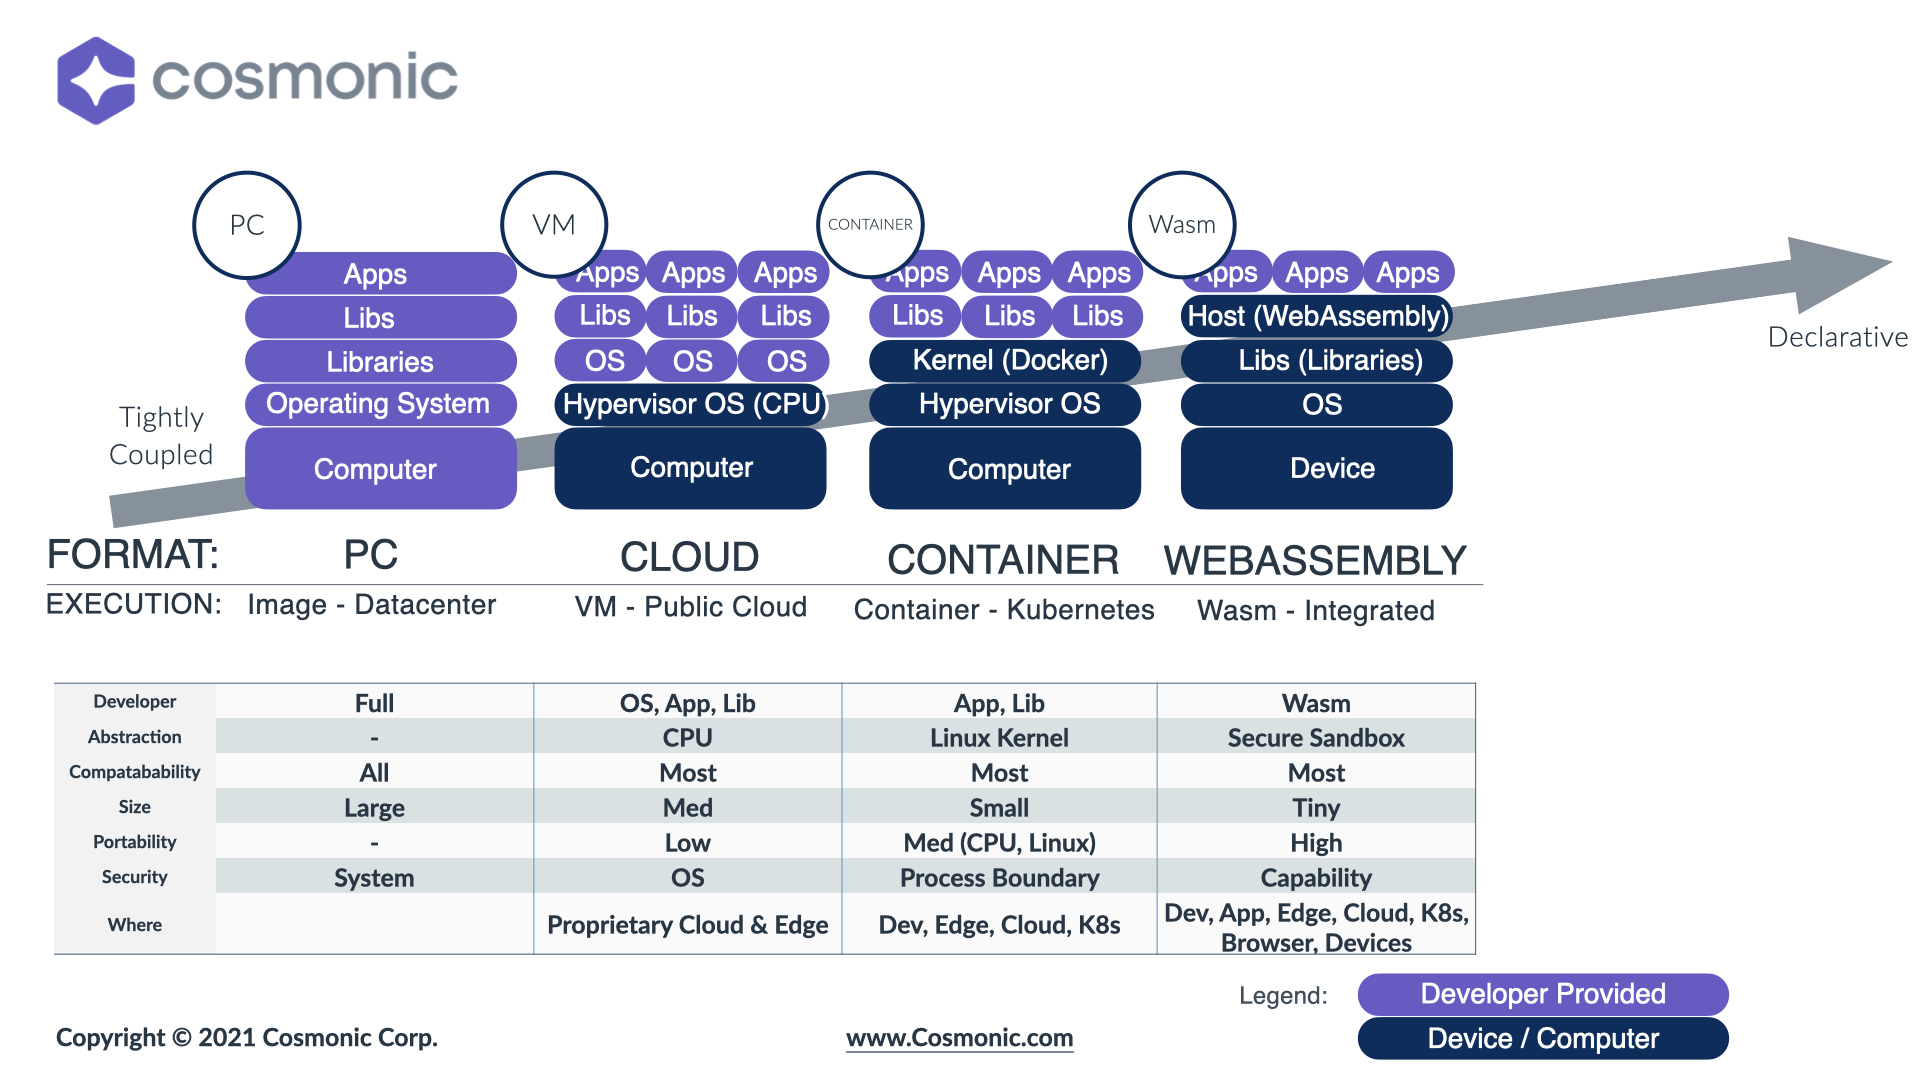 Epochs of Cloud Computing Technology - WebAssembly